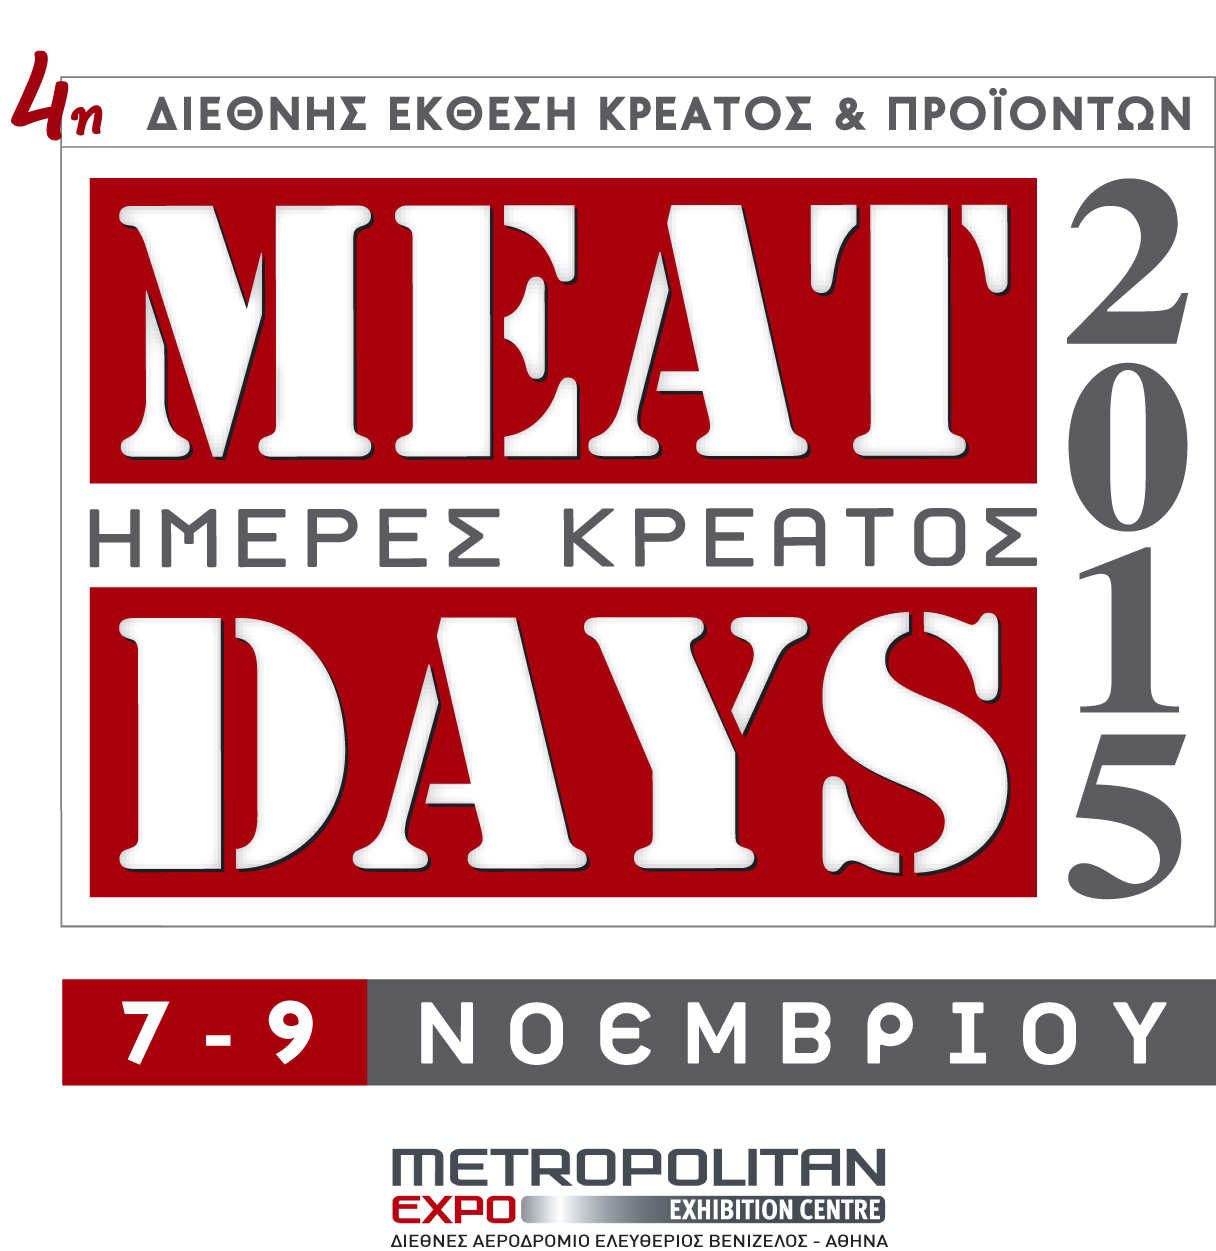 meatdays15logo_F2014251960.jpg